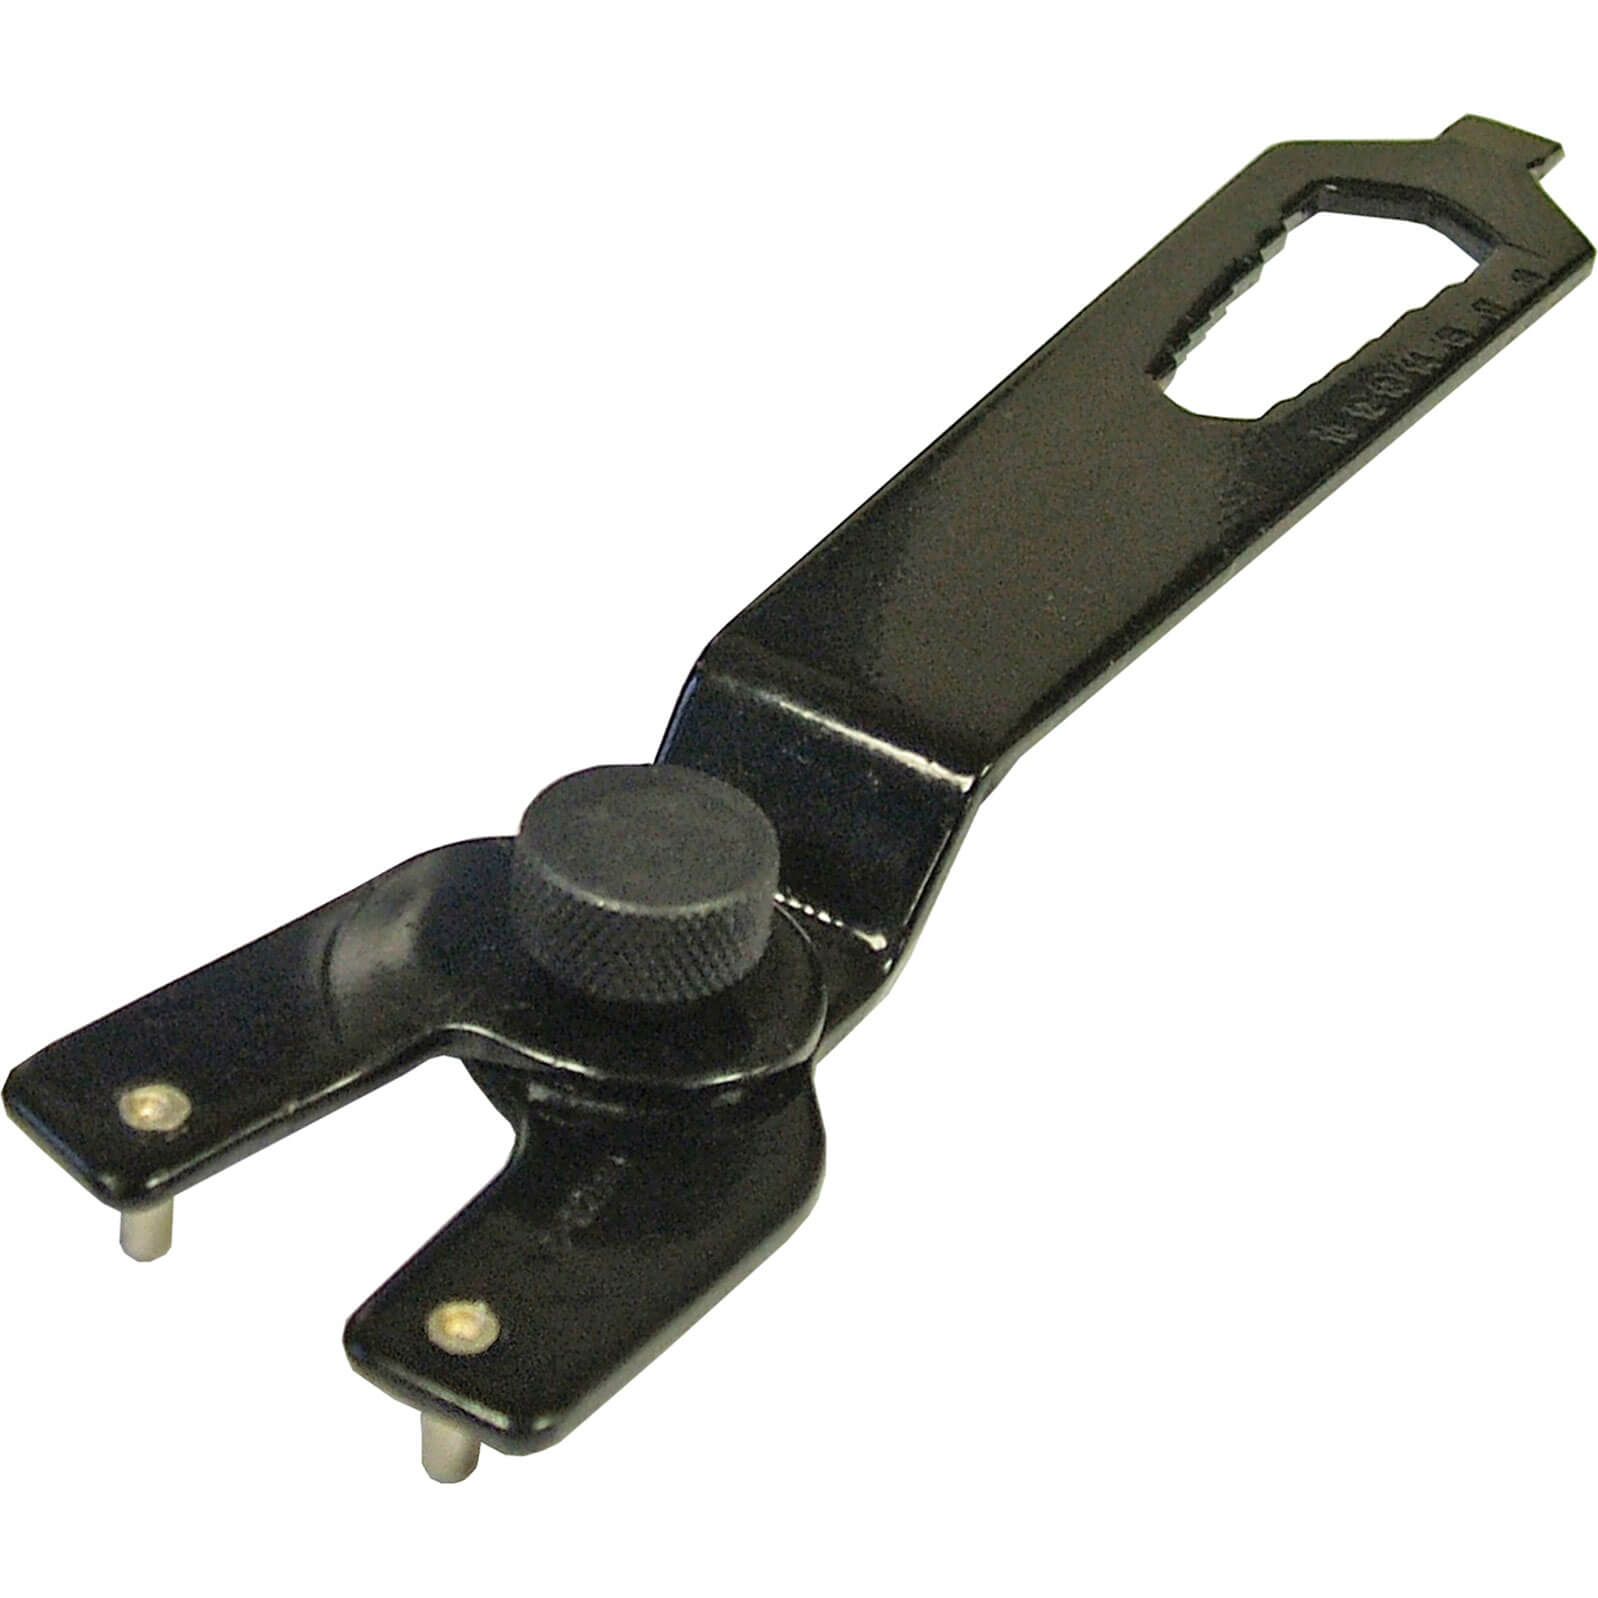 Image of Faithfull Adjustable Pin Key for Angle Grinders